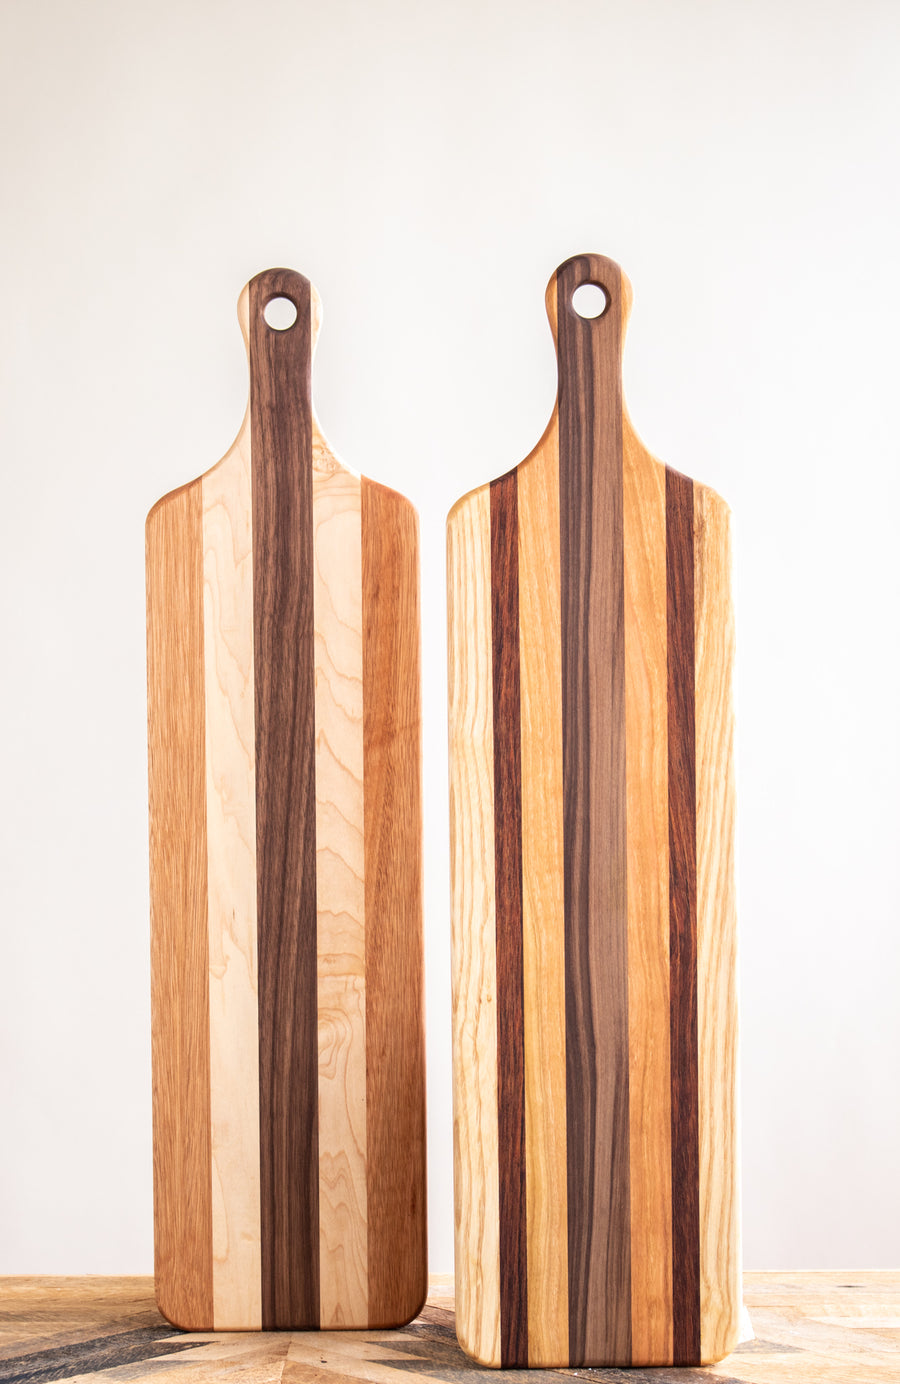 Kessler Woodworking, Paddle Cutting Board